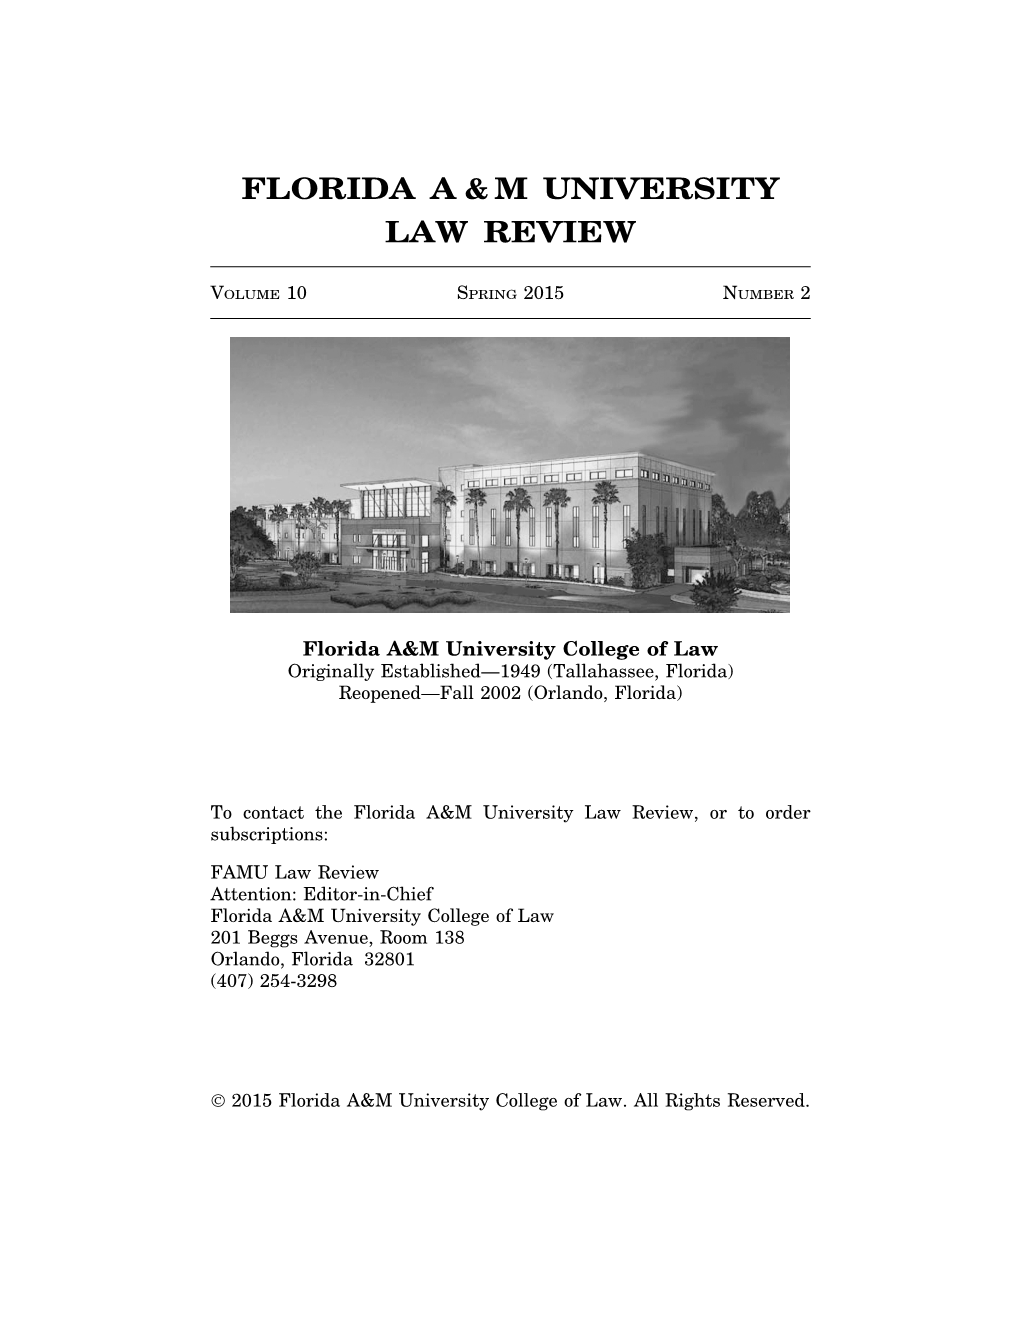 Florida a & M University Law Review